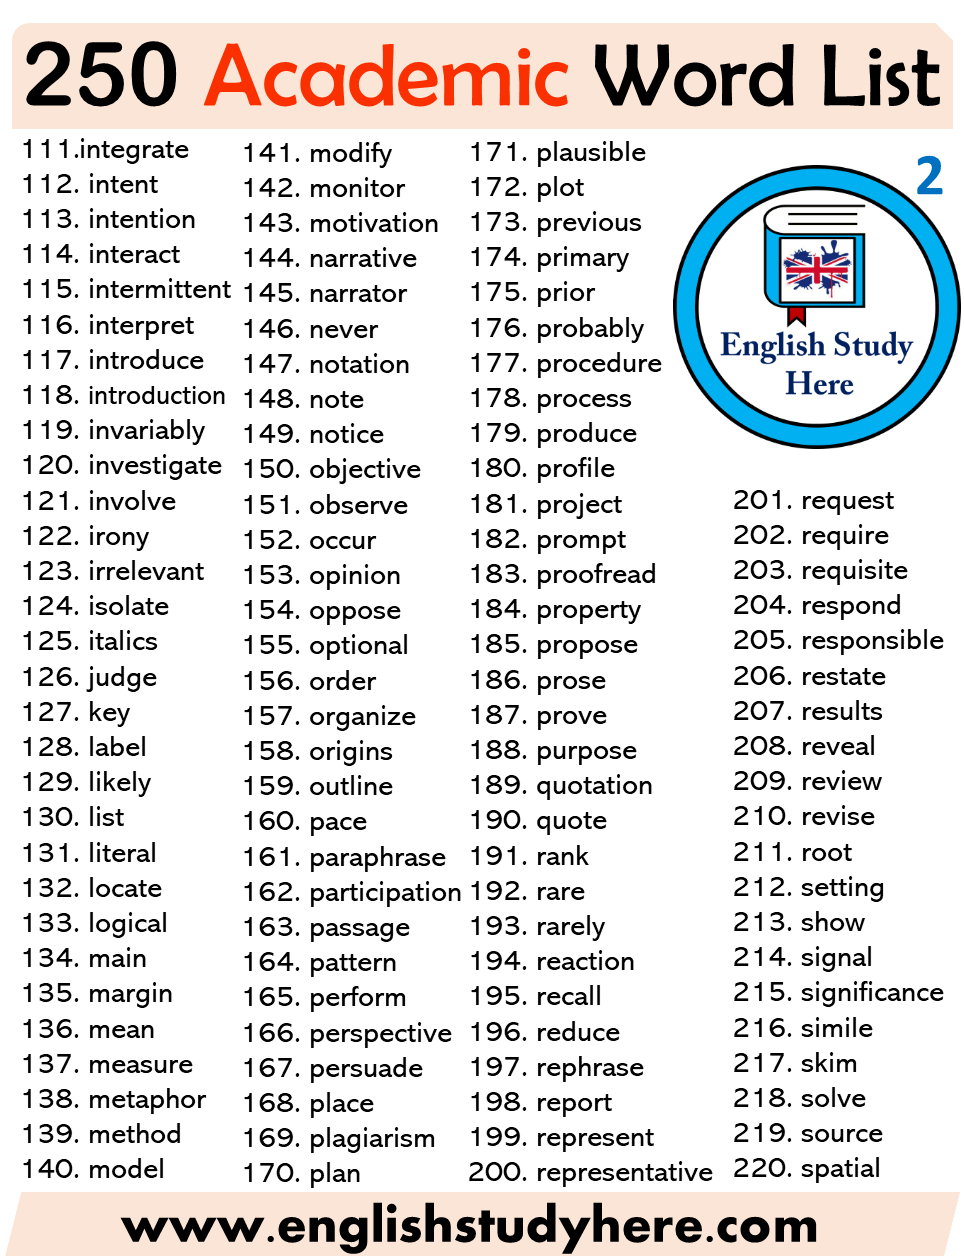 7 Academic Words List - English Study Here